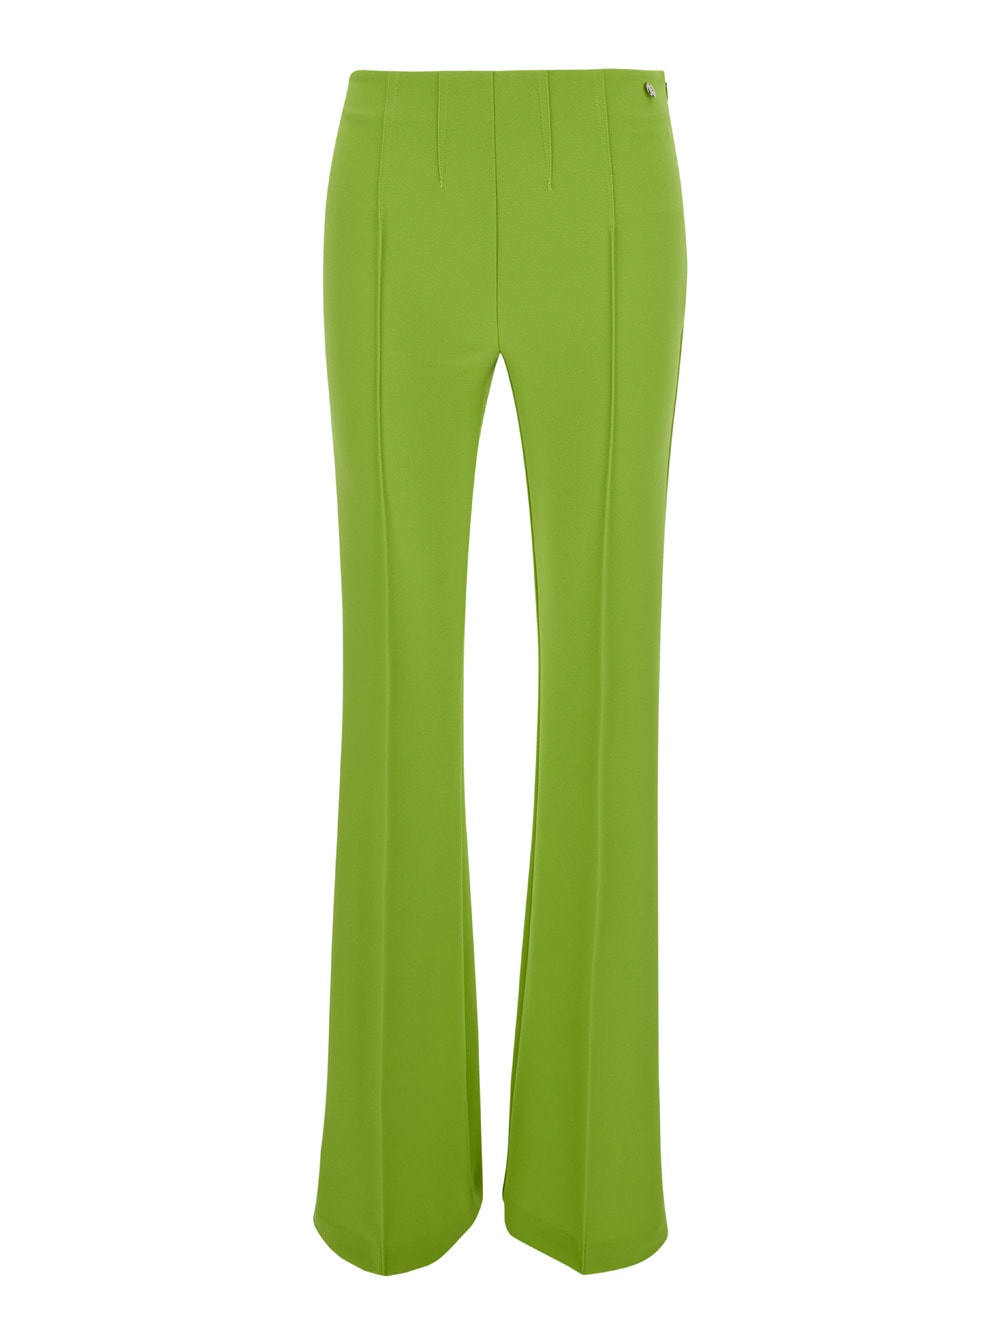 Shop Liu •jo Tailored High Waisted Green Pants In Stretch Fabric Woman Liu-jo